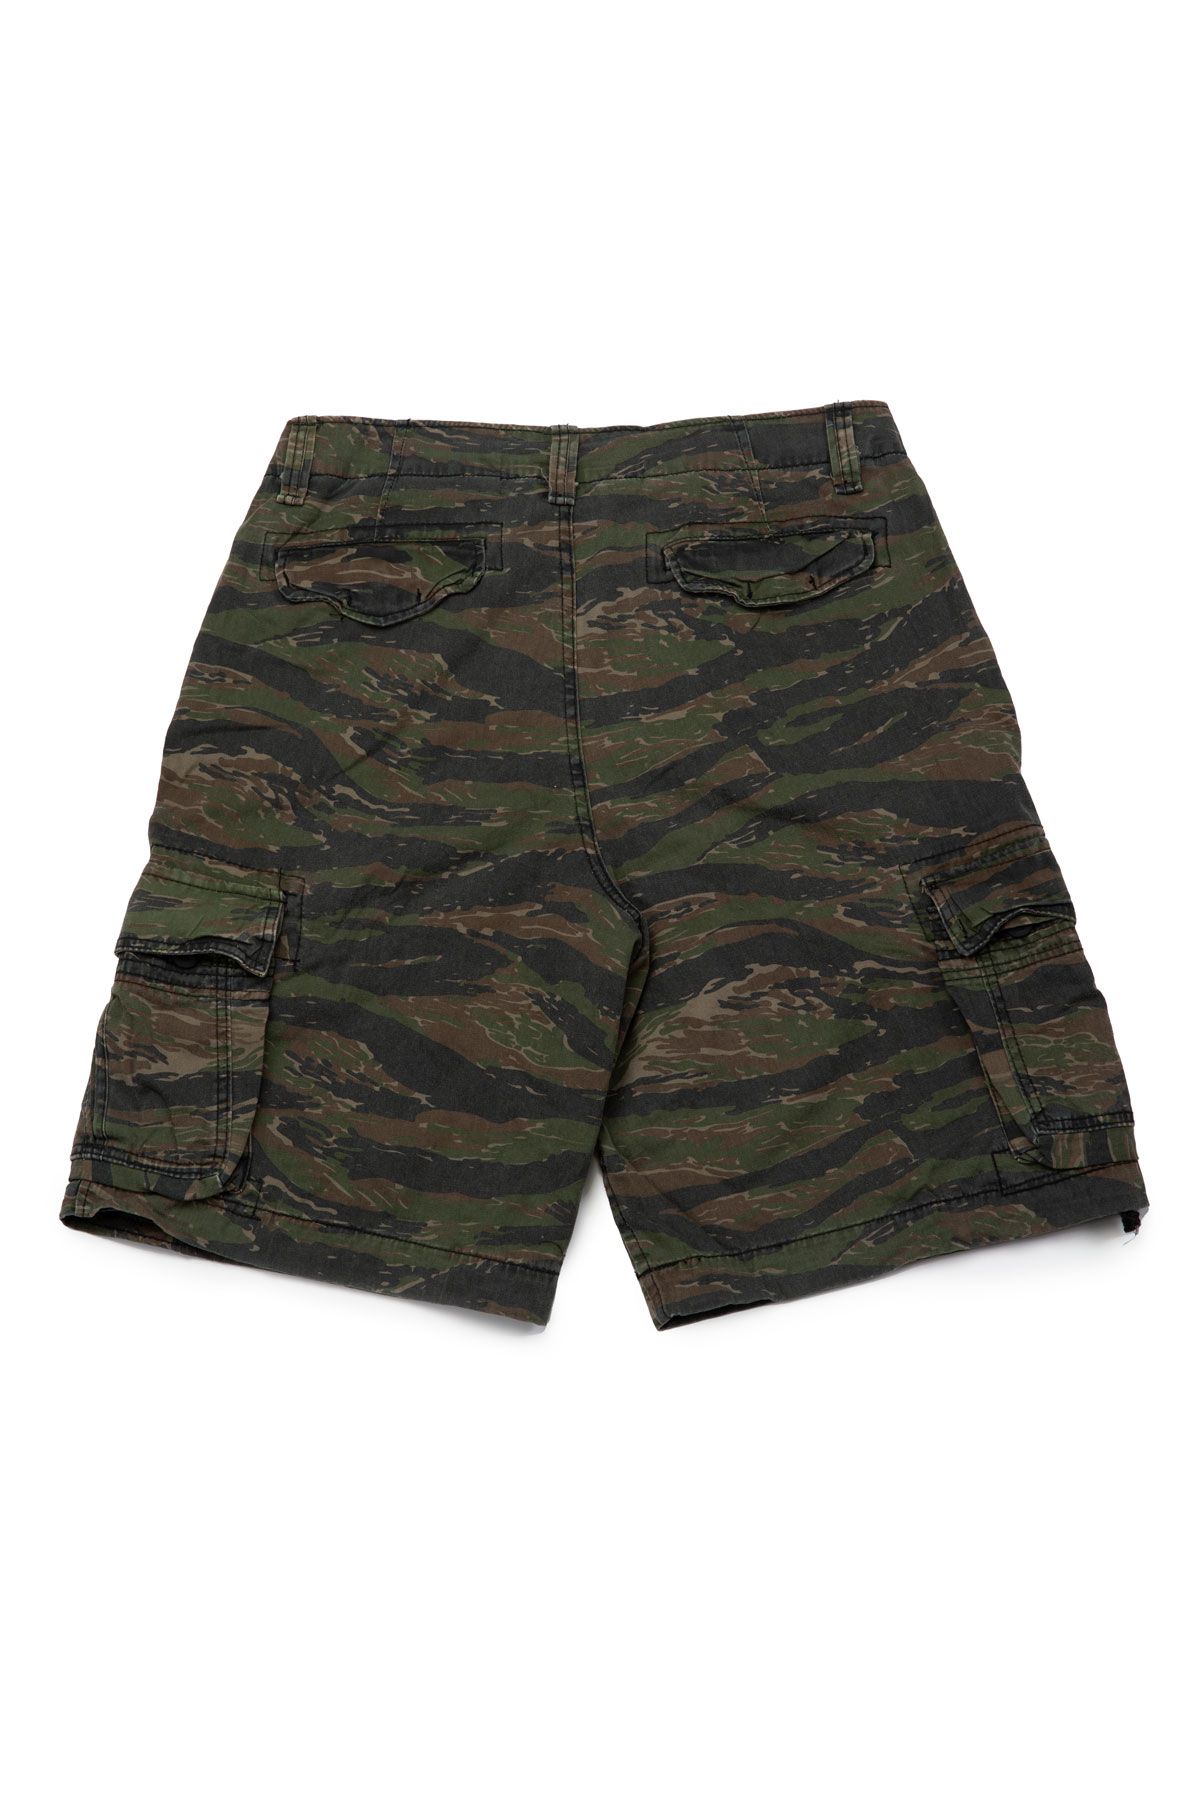 Vintage Camo Infantry Utility Shorts in Tiger Stripe Camo